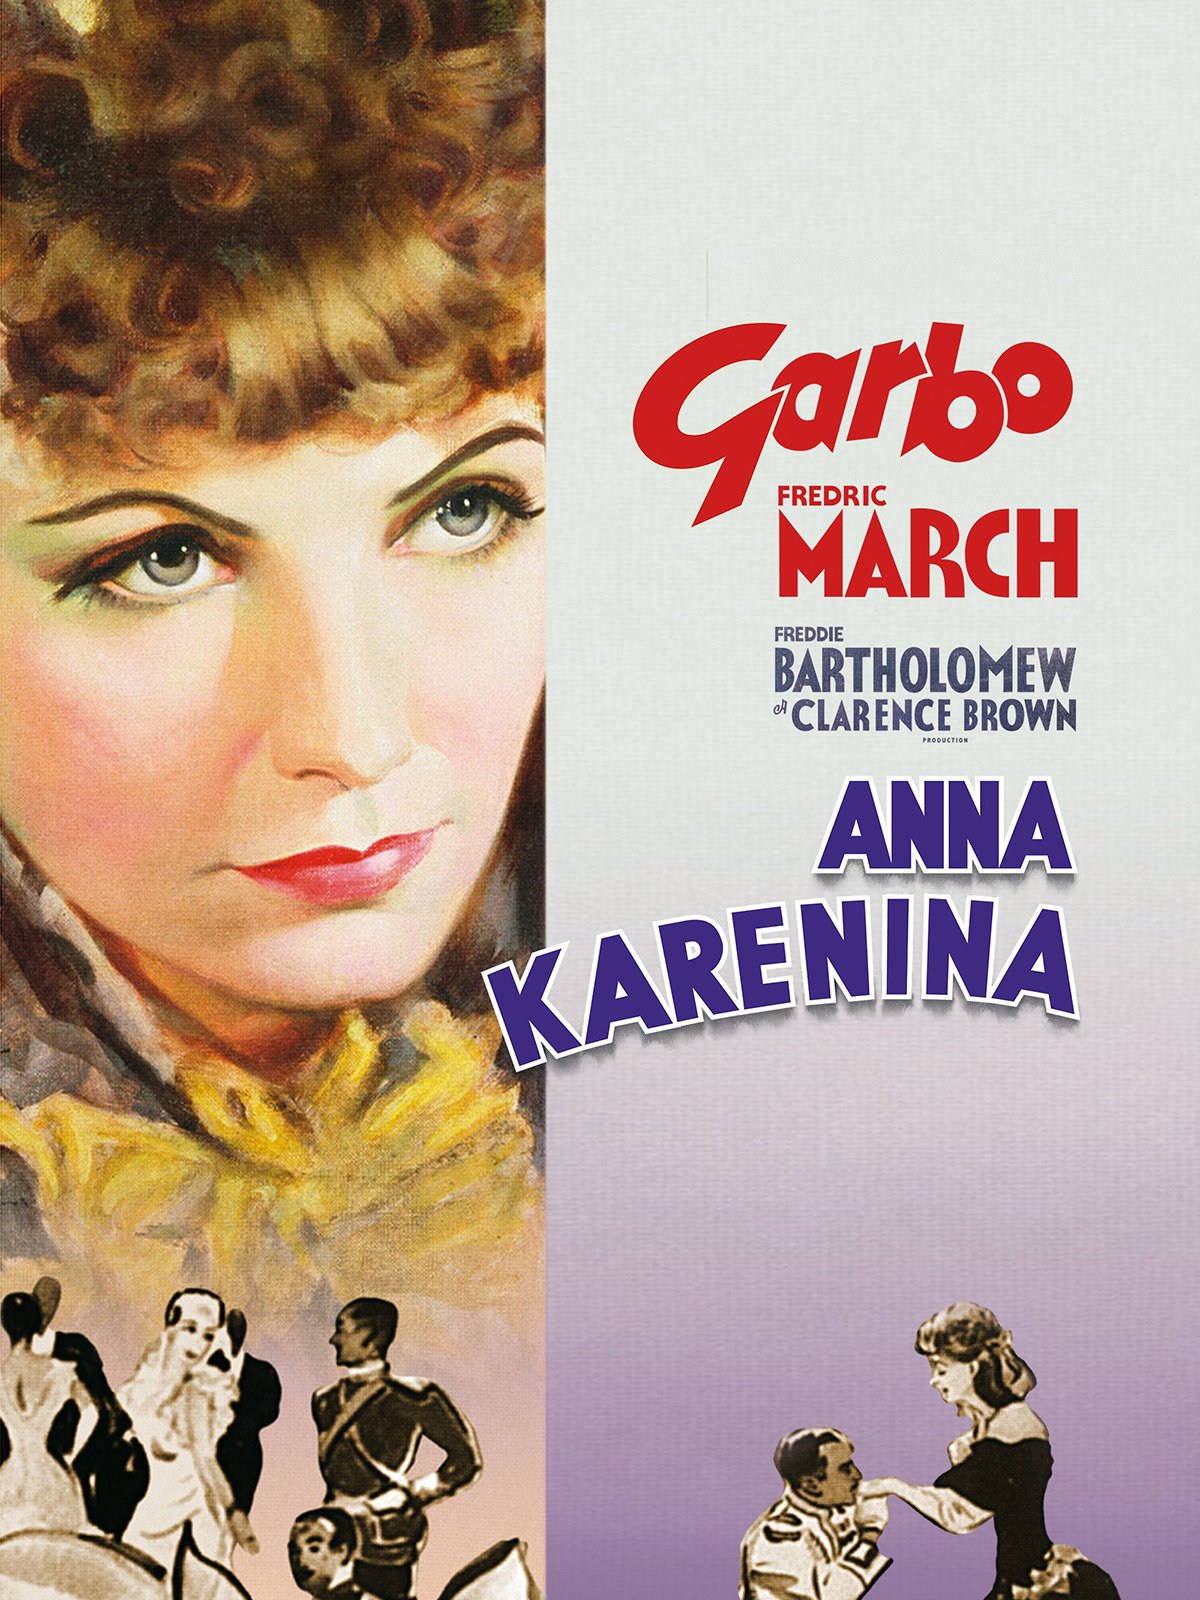 Anna Karenina 1935